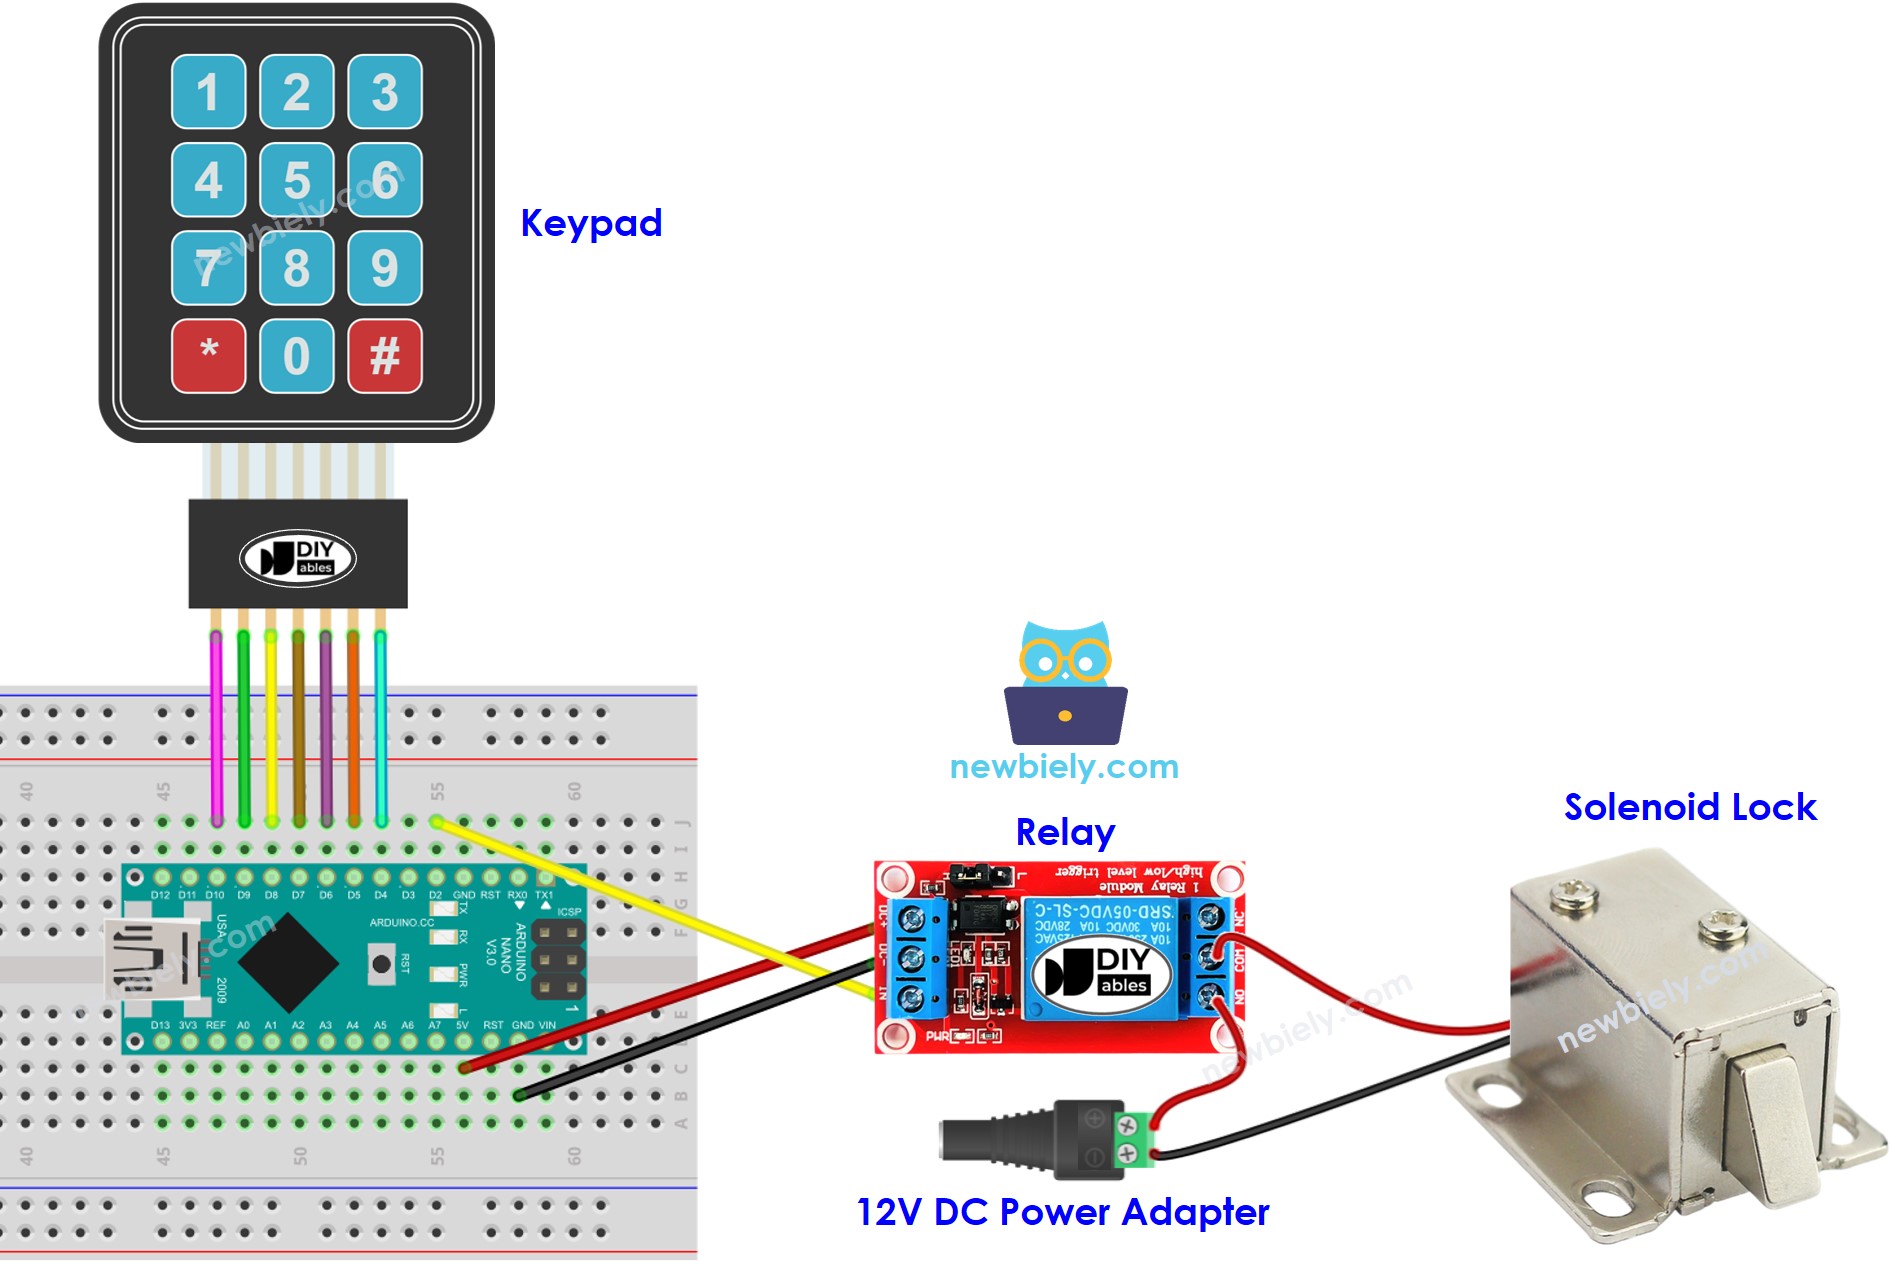 The wiring diagram between Arduino Nano and, keypad, solenoid lock